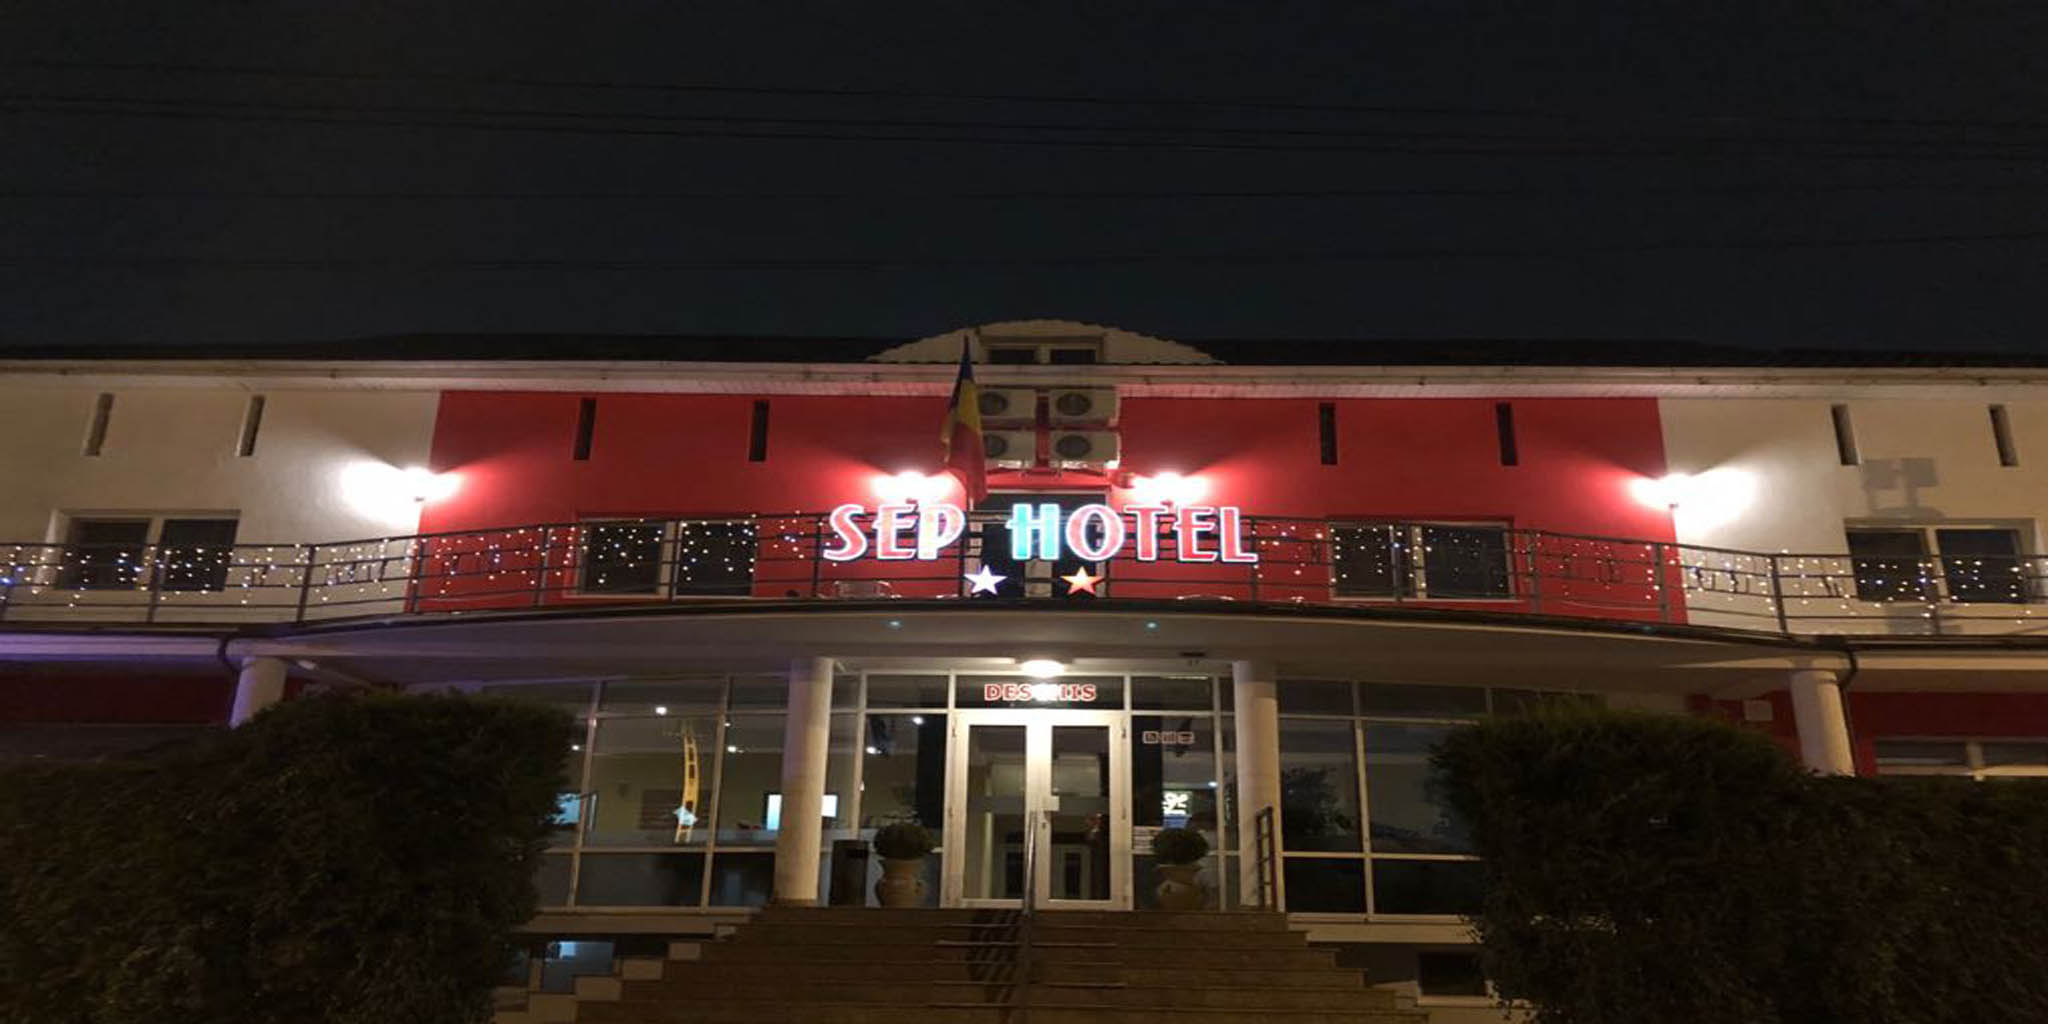 Sep Hotel